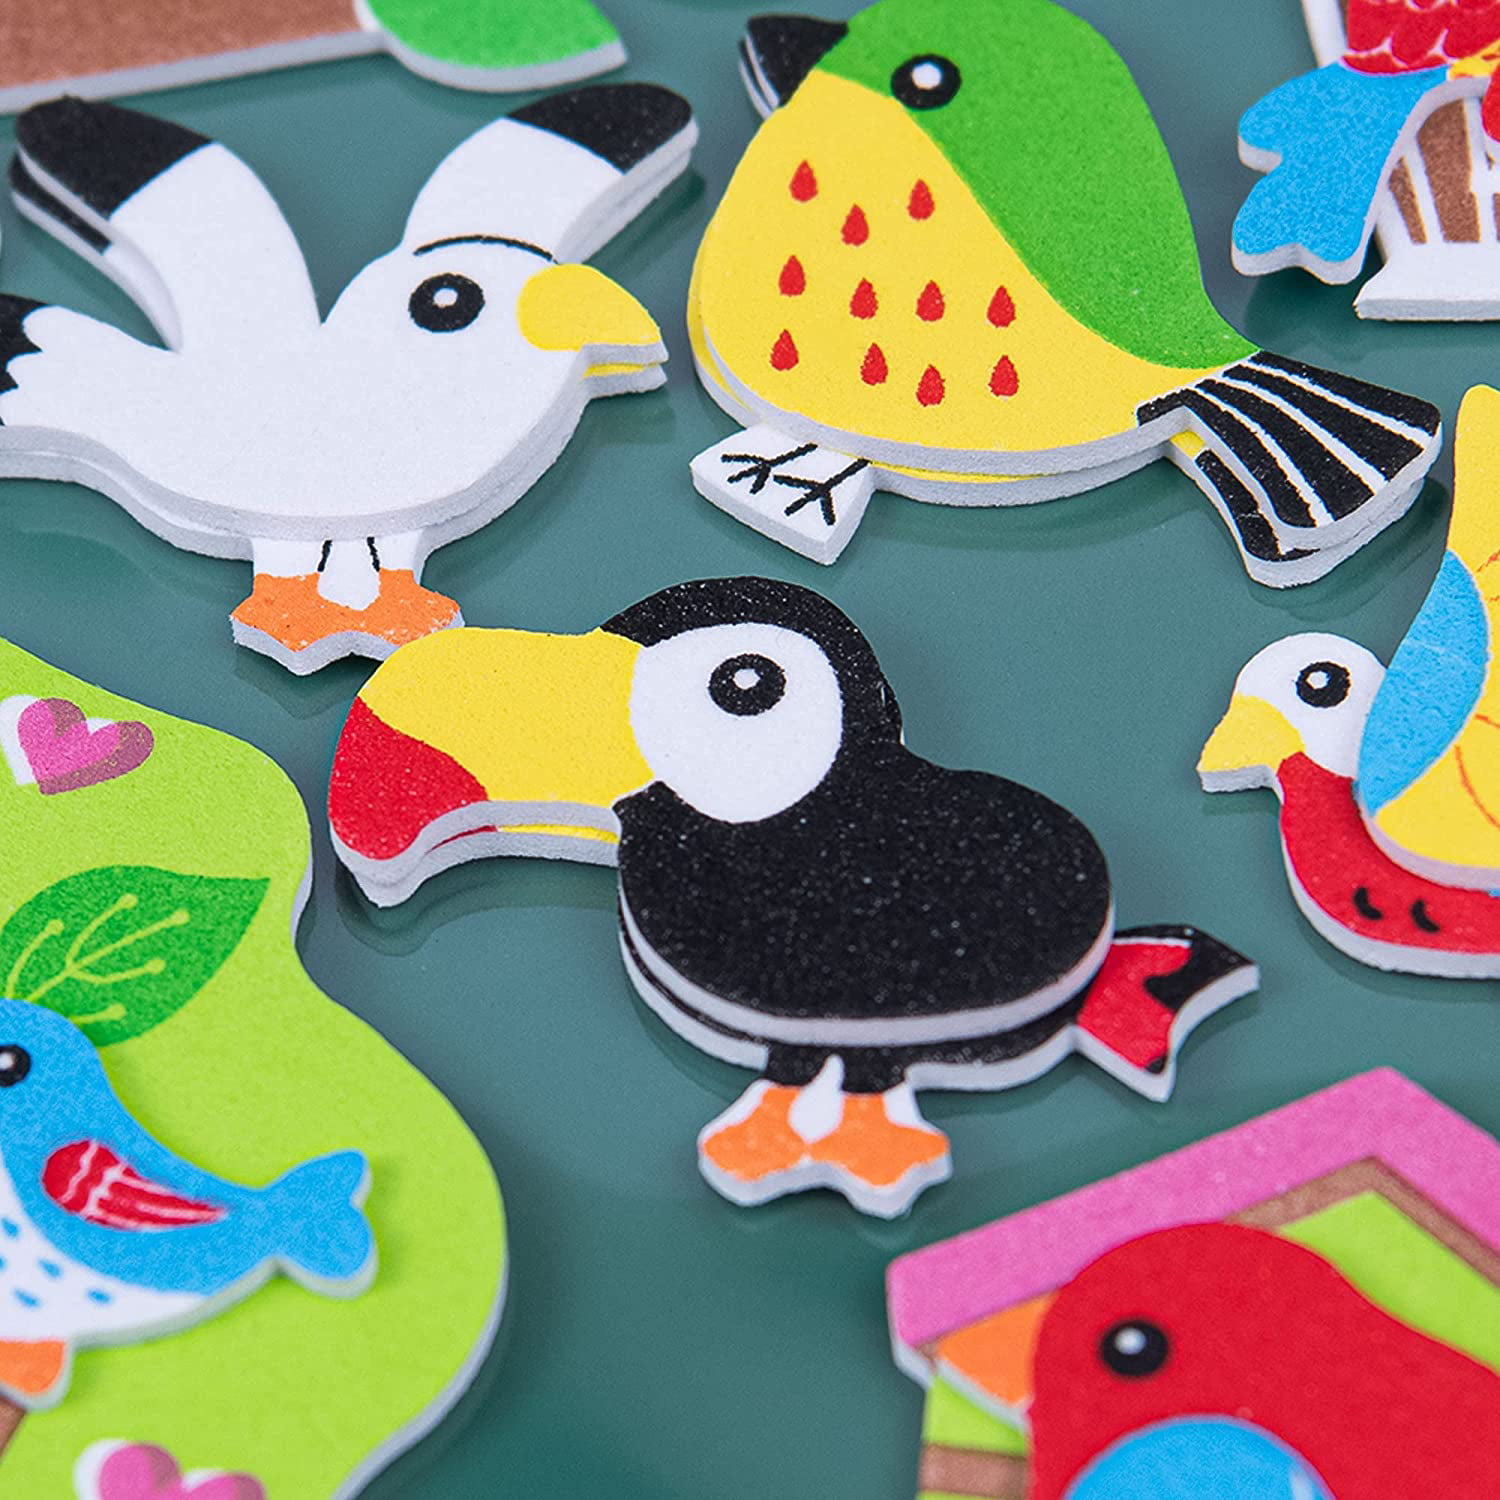 Stickers Kids 3D Pack 30 Foam & Felt Shapes Childrens Fun Crafts